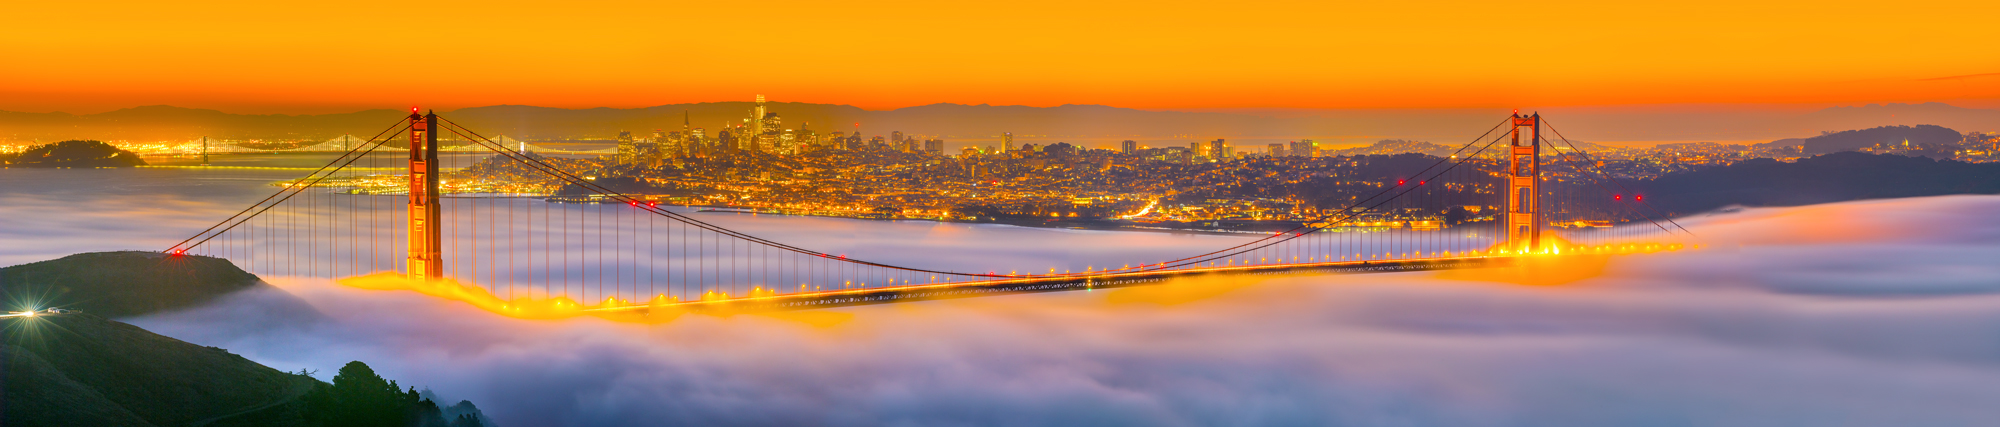 Golden Gate Bridge San Francisco Bay Bridge Transamerica Pyramid Coit Tower Panorama Mark Lilly Fine Art Photography